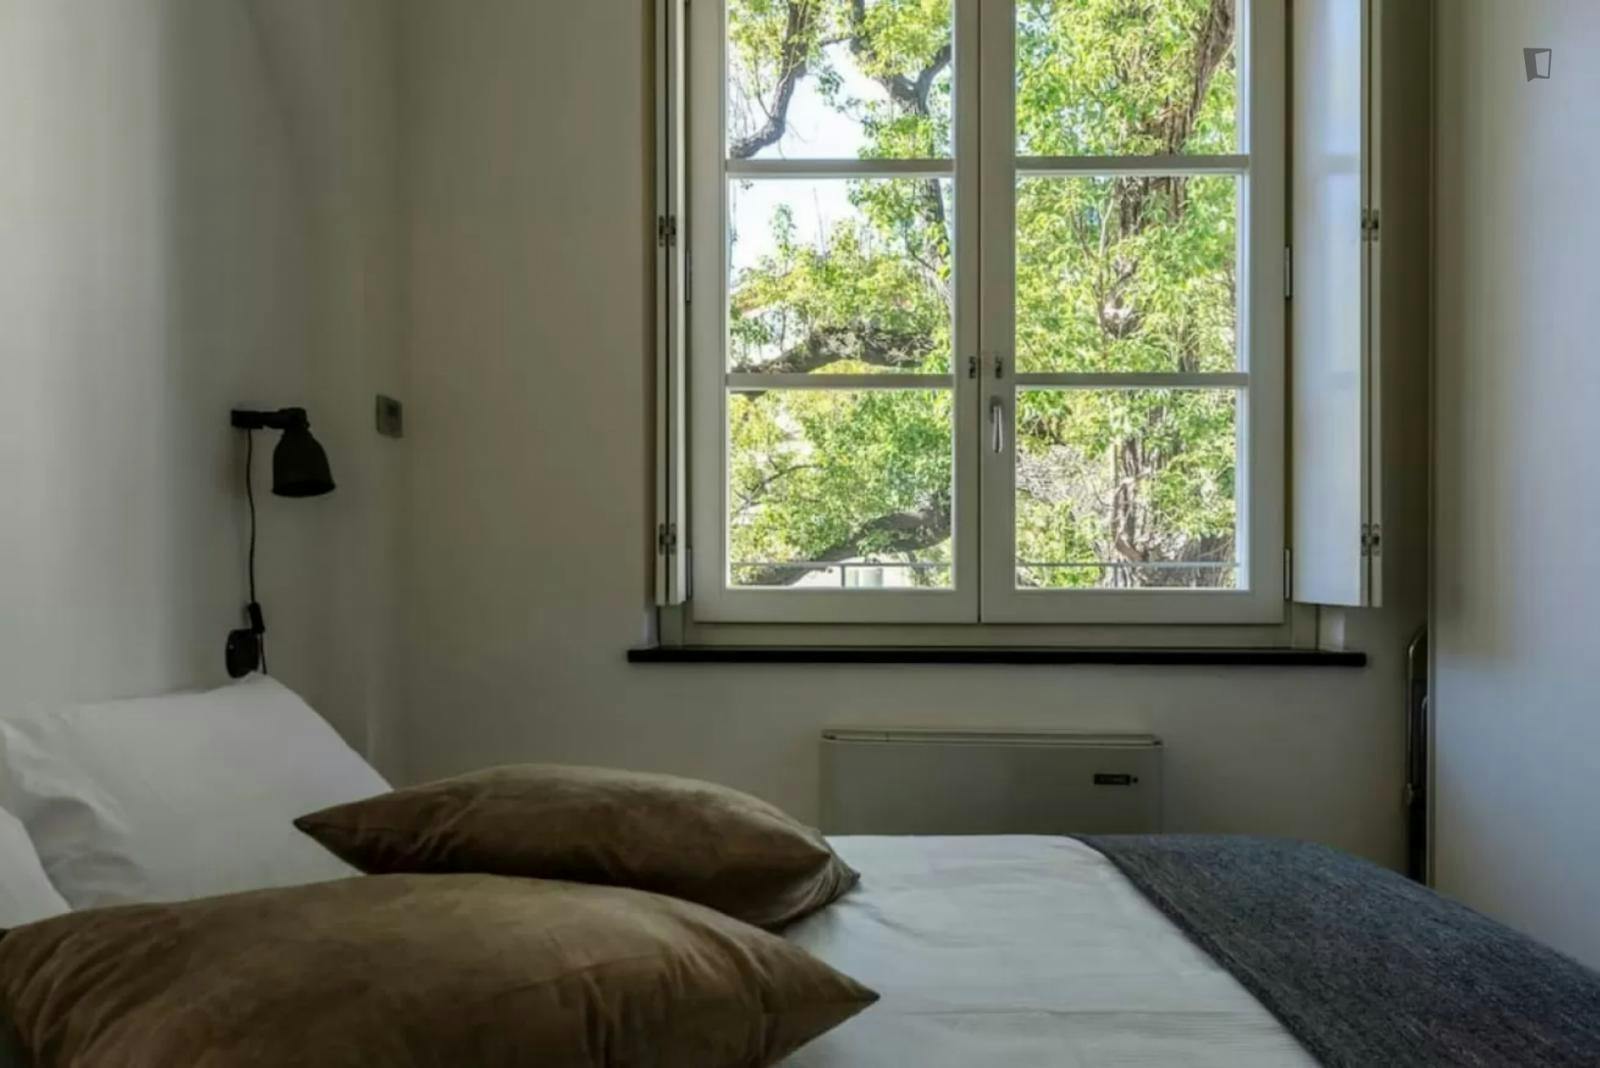 Decent 1-bedroom flat near Corvetto square